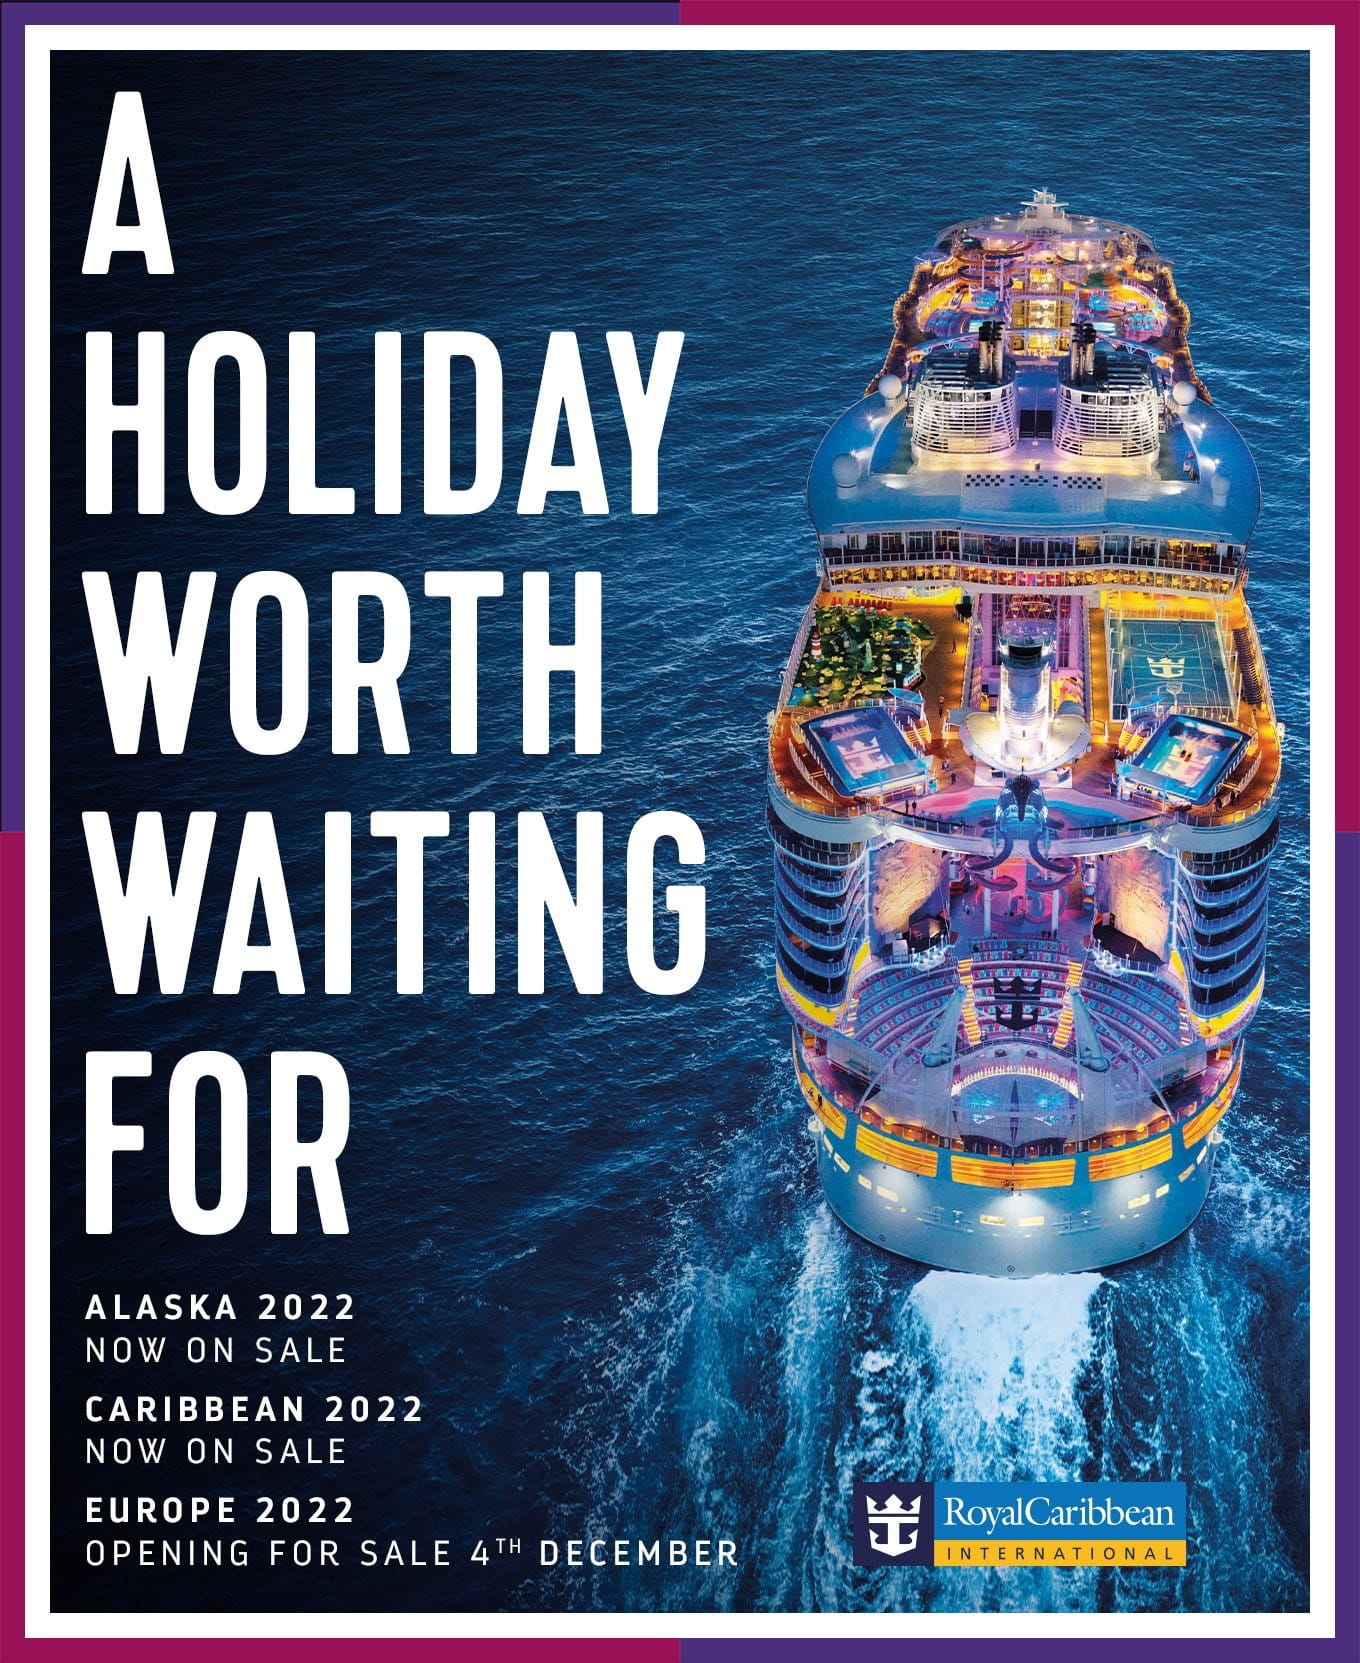 Royal Caribbean Cruise Holiday Deals 2022 - Cruise Nation - Thanksgiving 2022 Cruises From Mismi